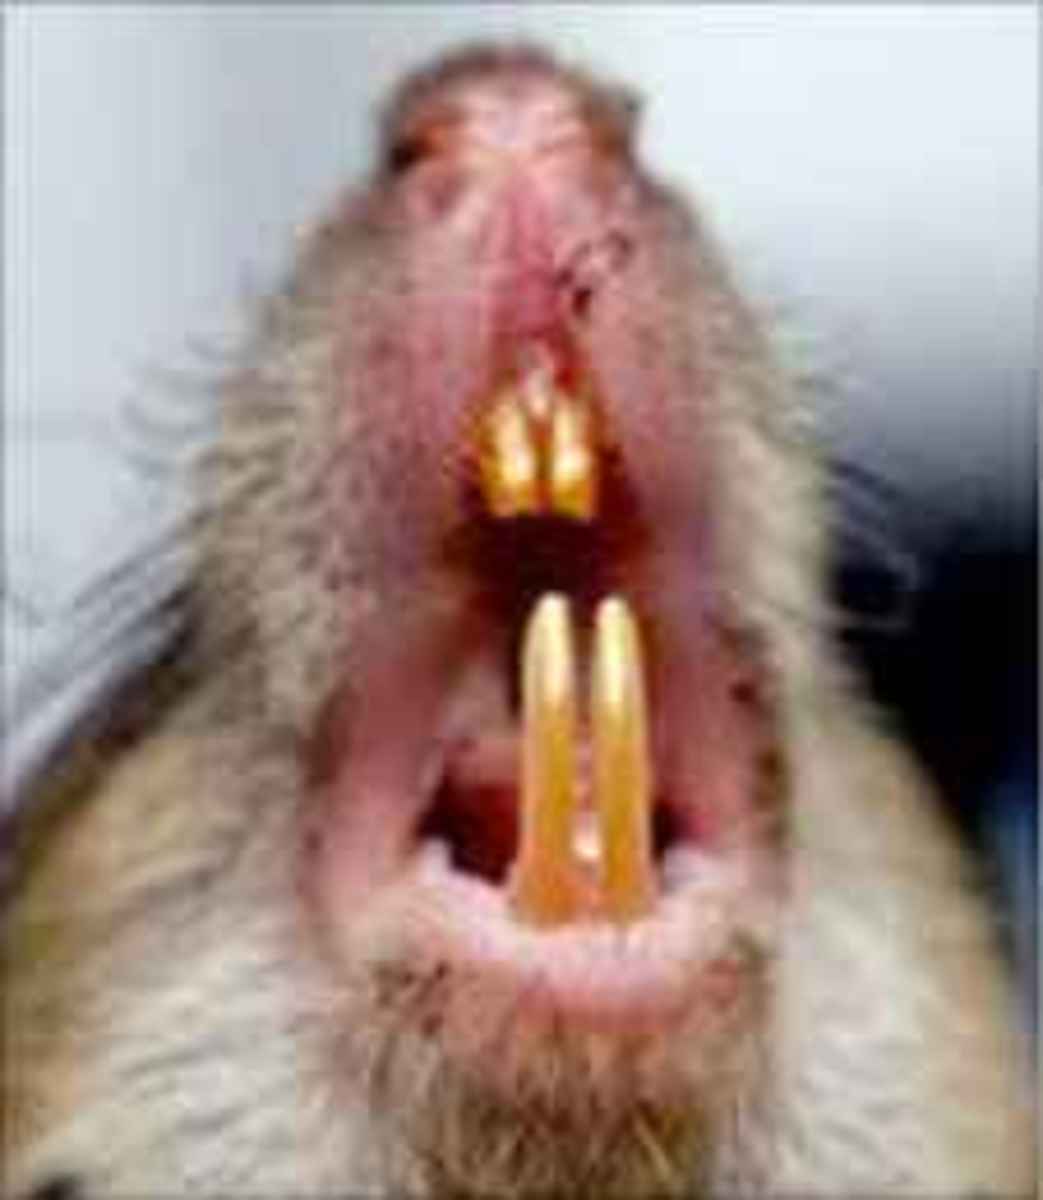 A Rat's Teeth